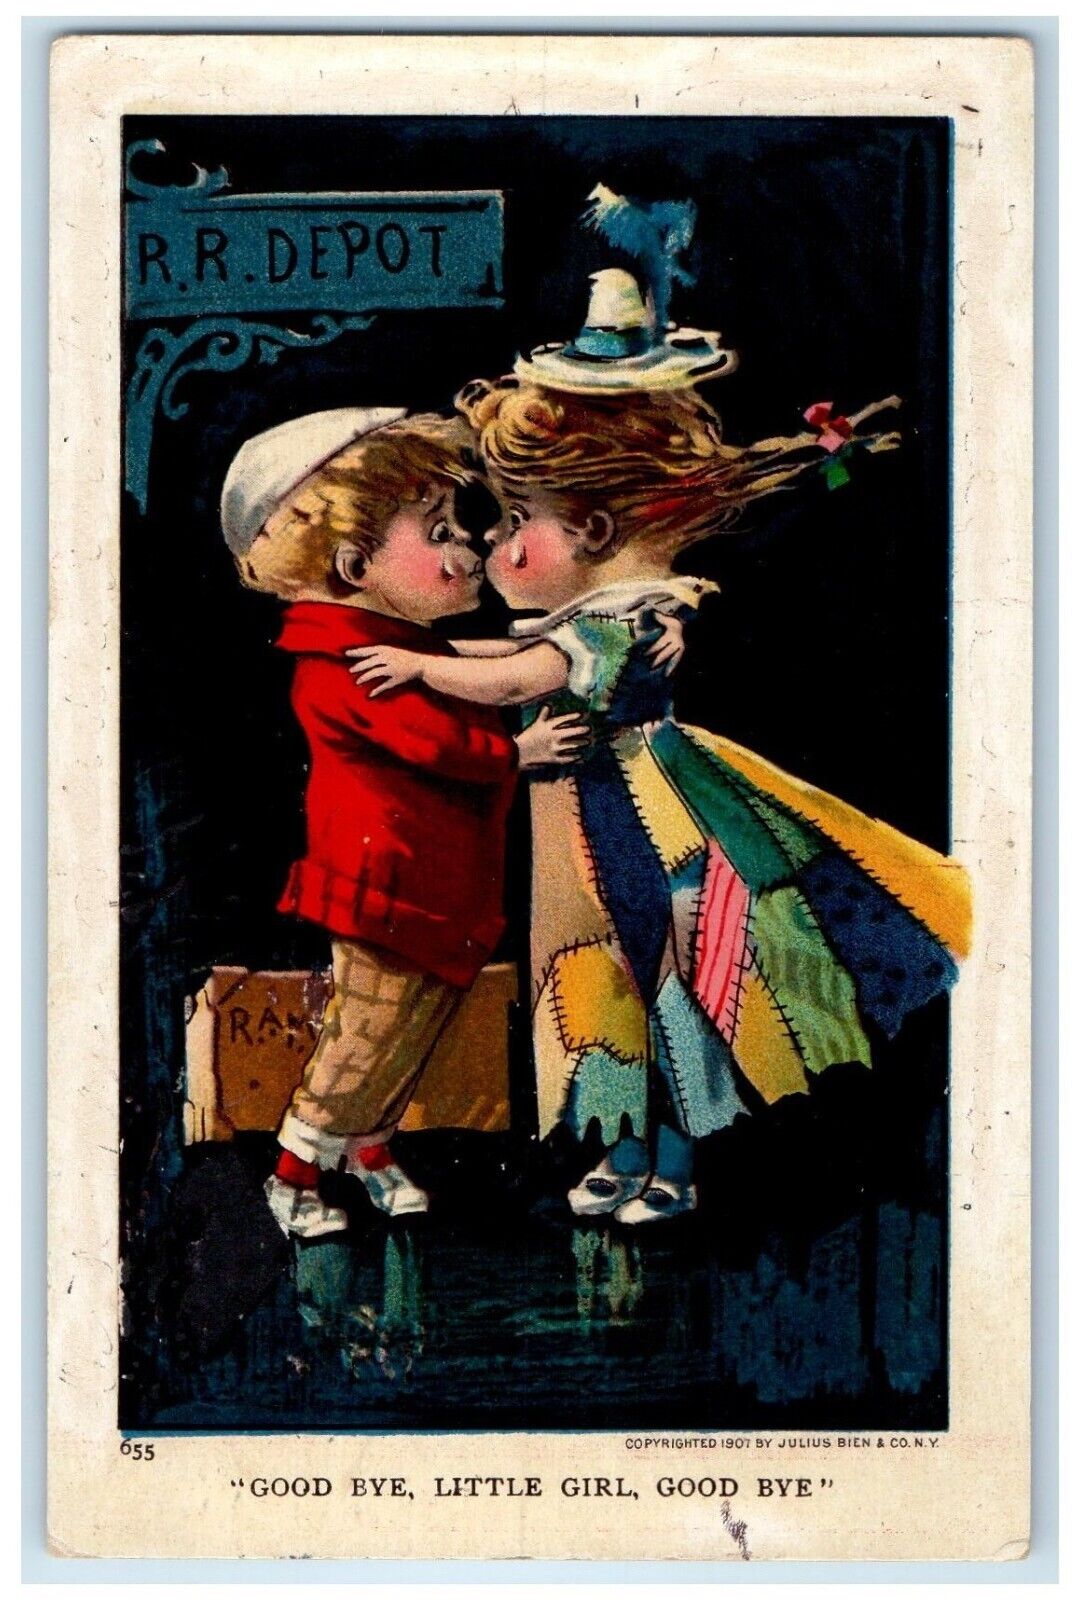 1908 RR Depot Good Bye Little Girl Sweetheart South Saint Joseph MO Postcard